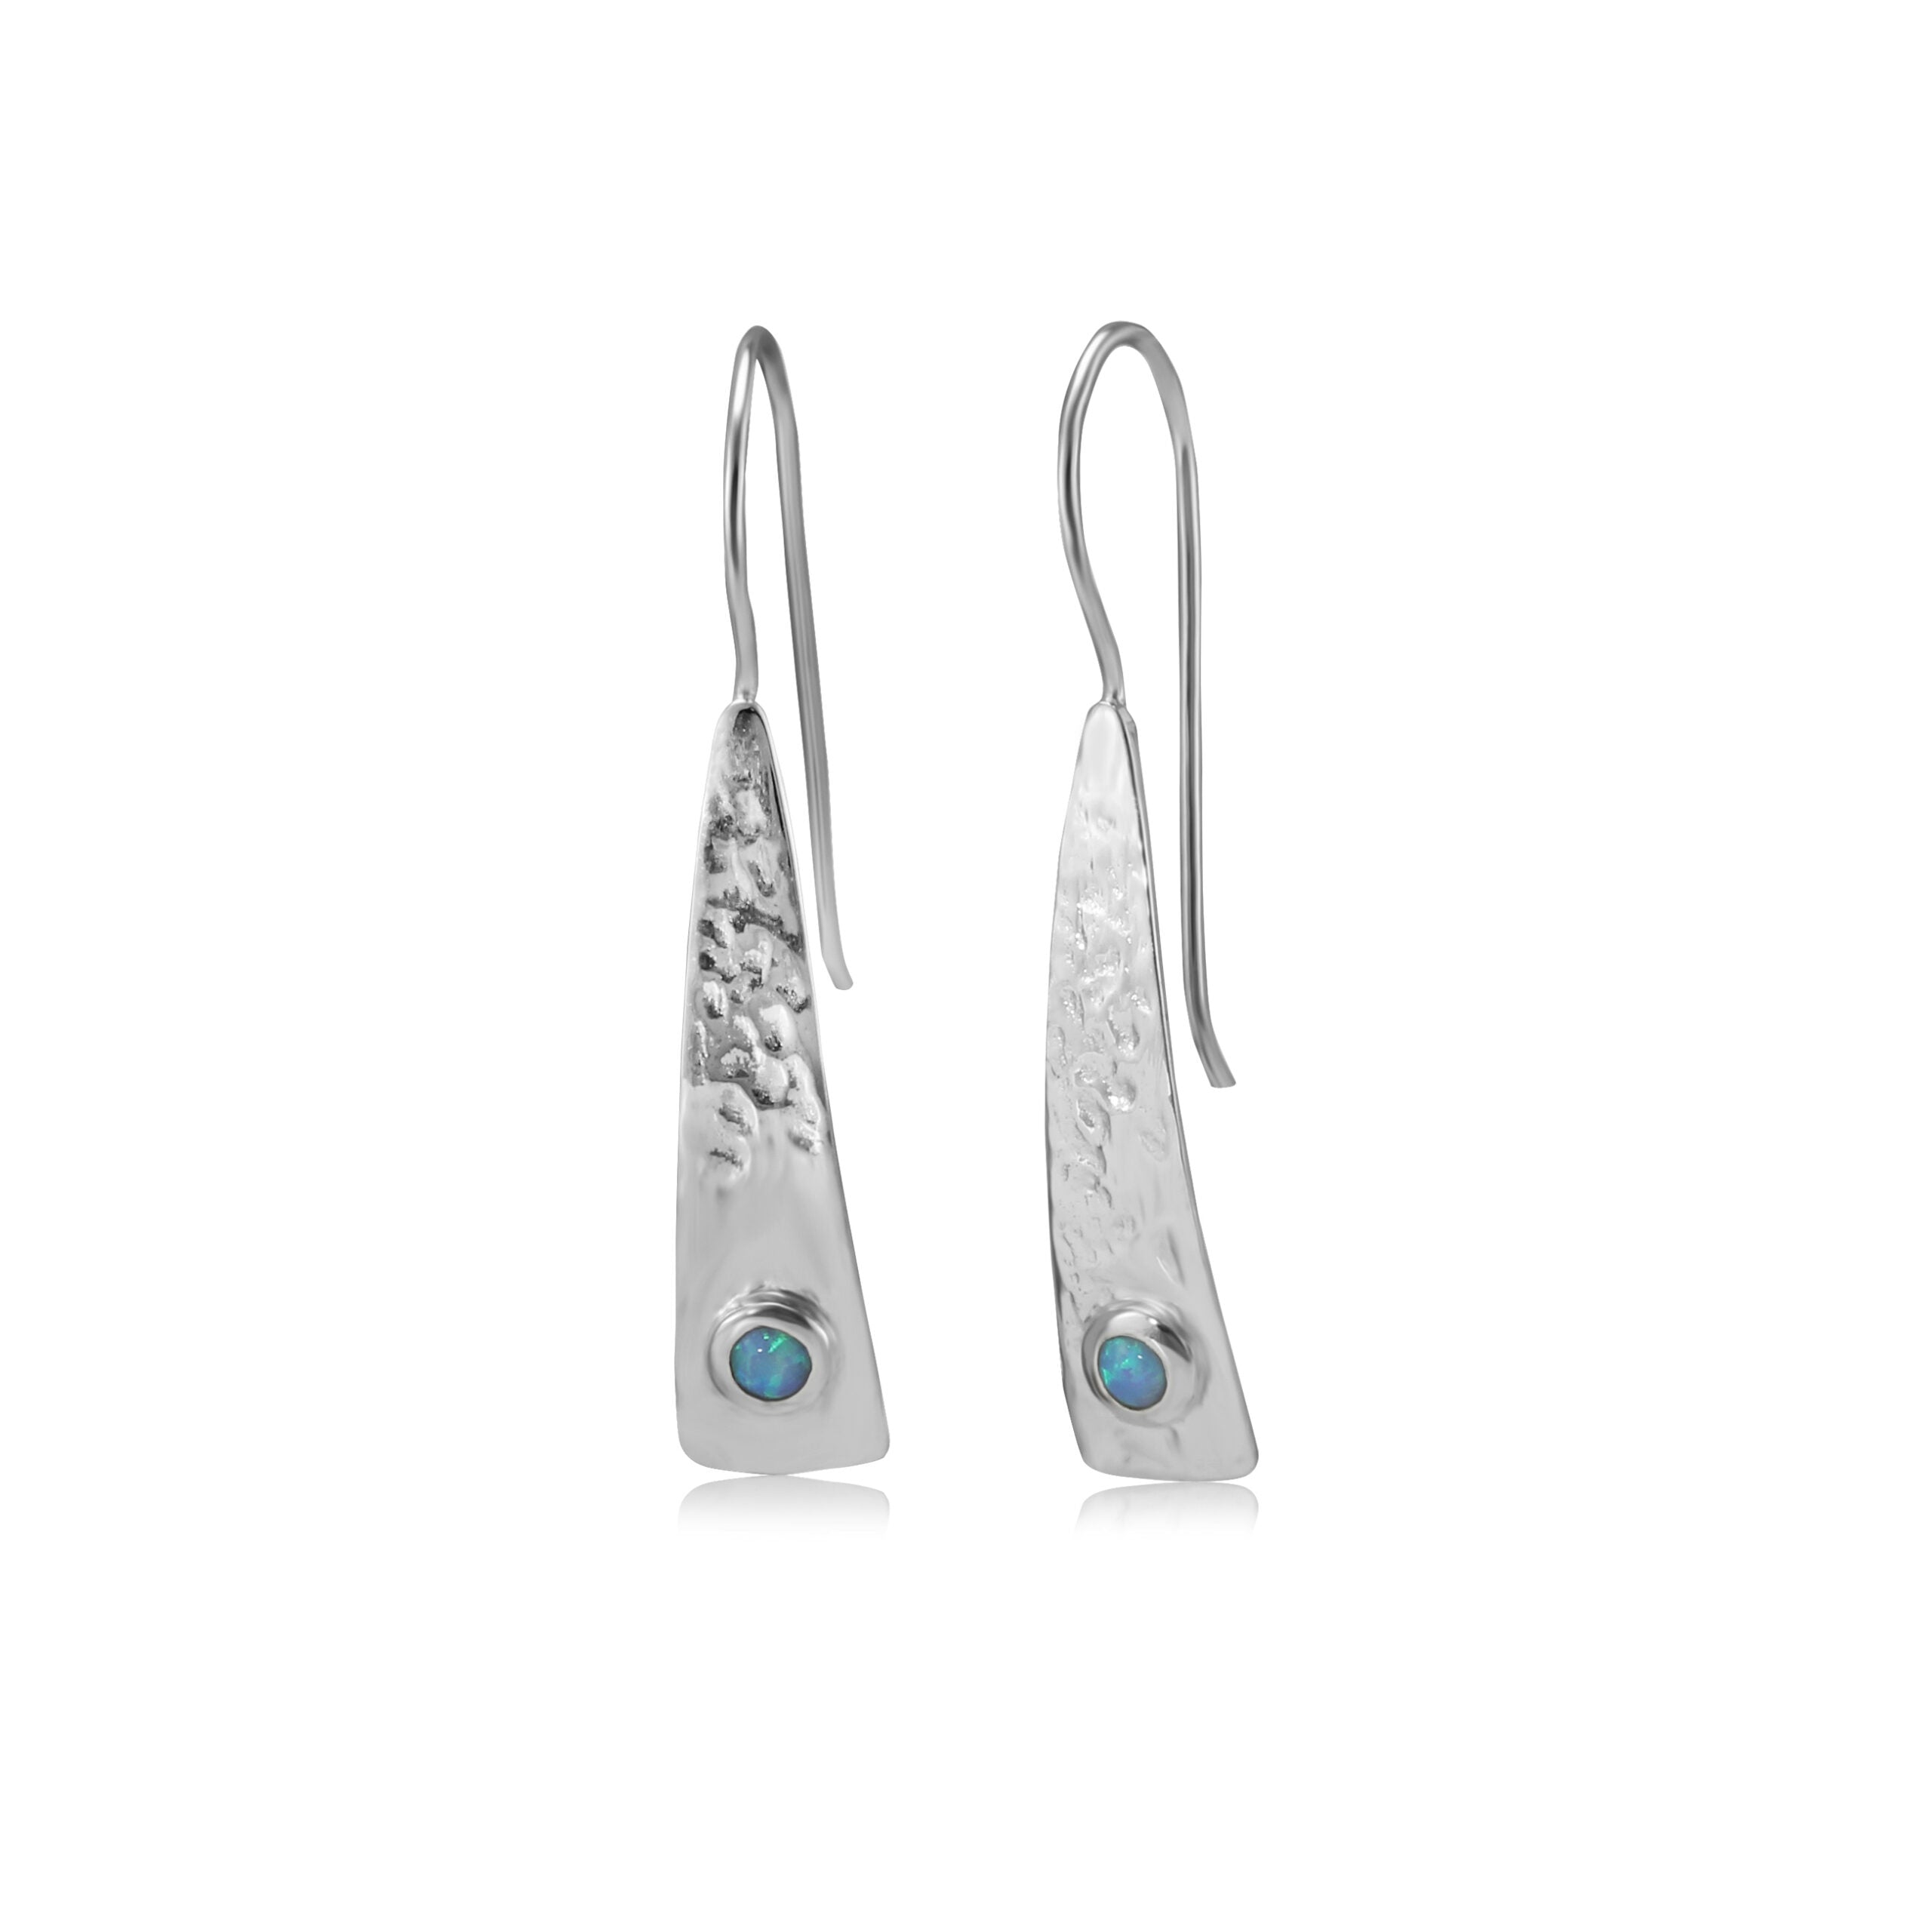 Silver Hammered Opal Drops - The Nancy Smillie Shop - Art, Jewellery & Designer Gifts Glasgow